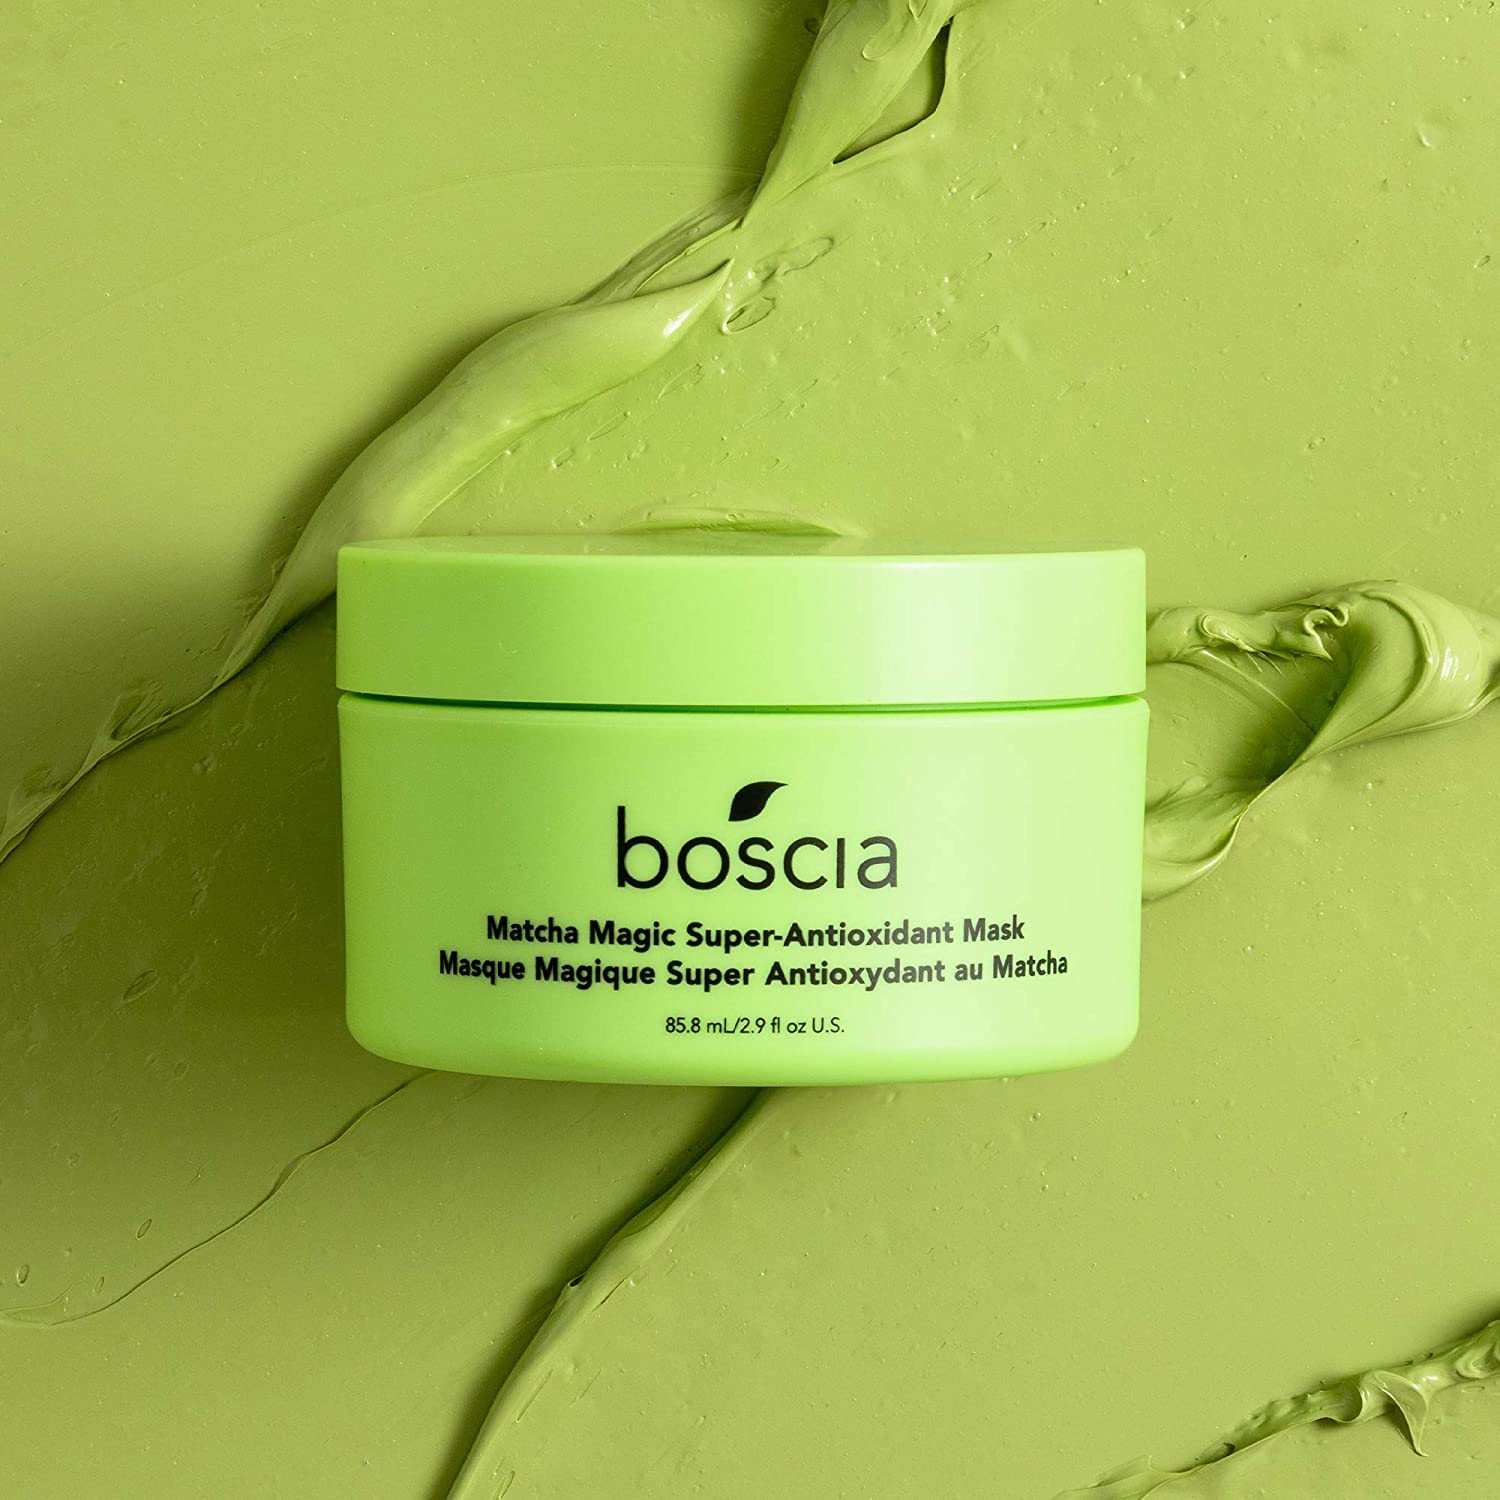 Boscia
 “MATCHA Magic Super-Antioxidant Mask”